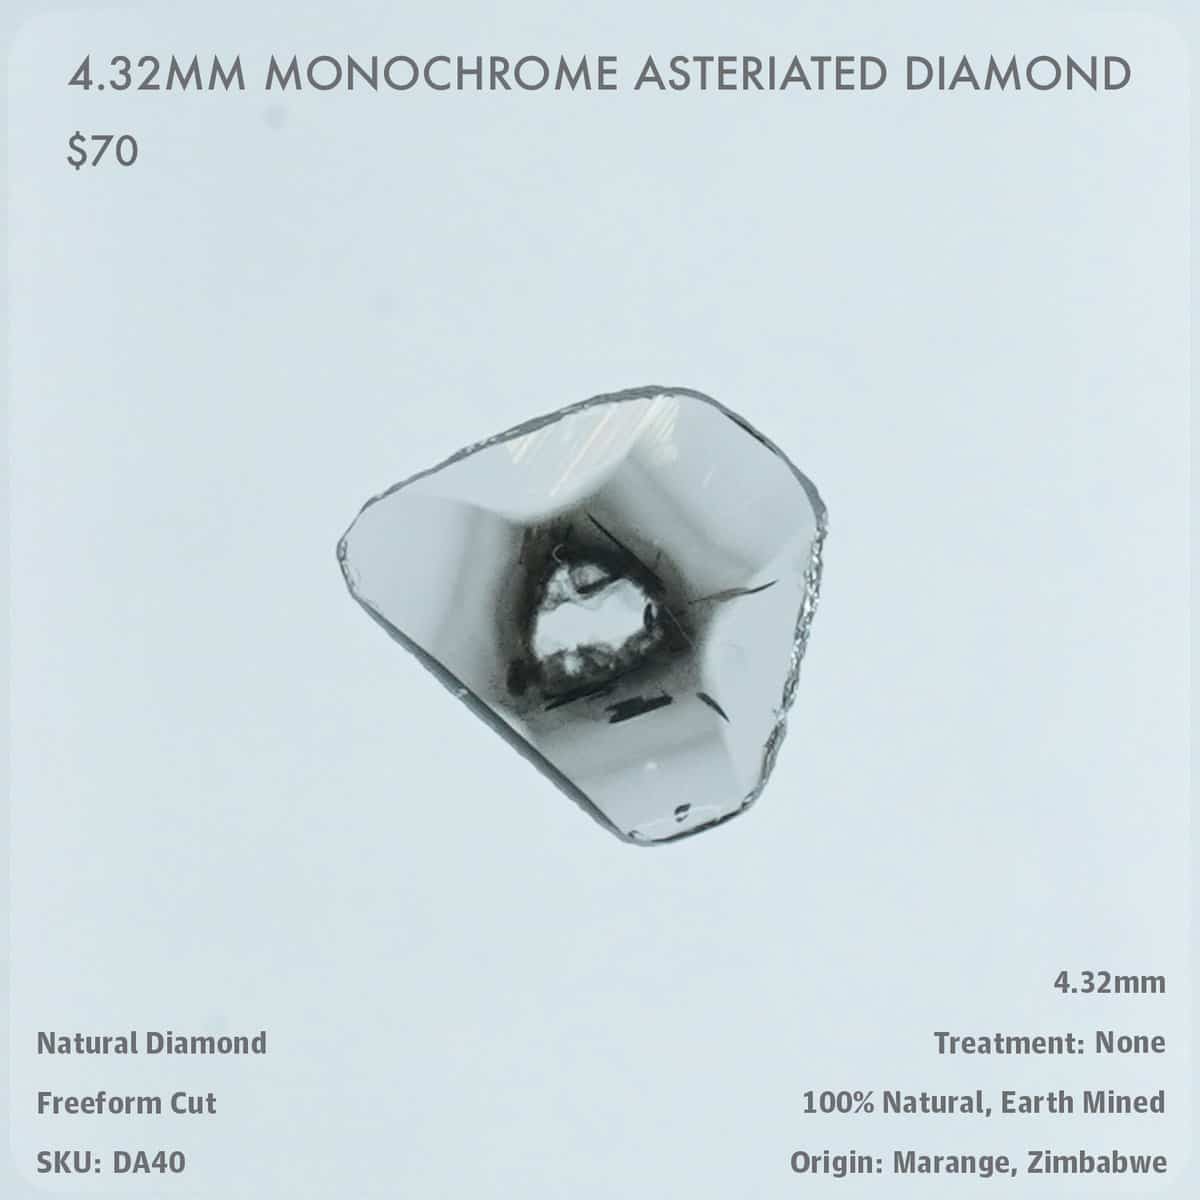 4.32mm Monochrome Asteriated Diamond